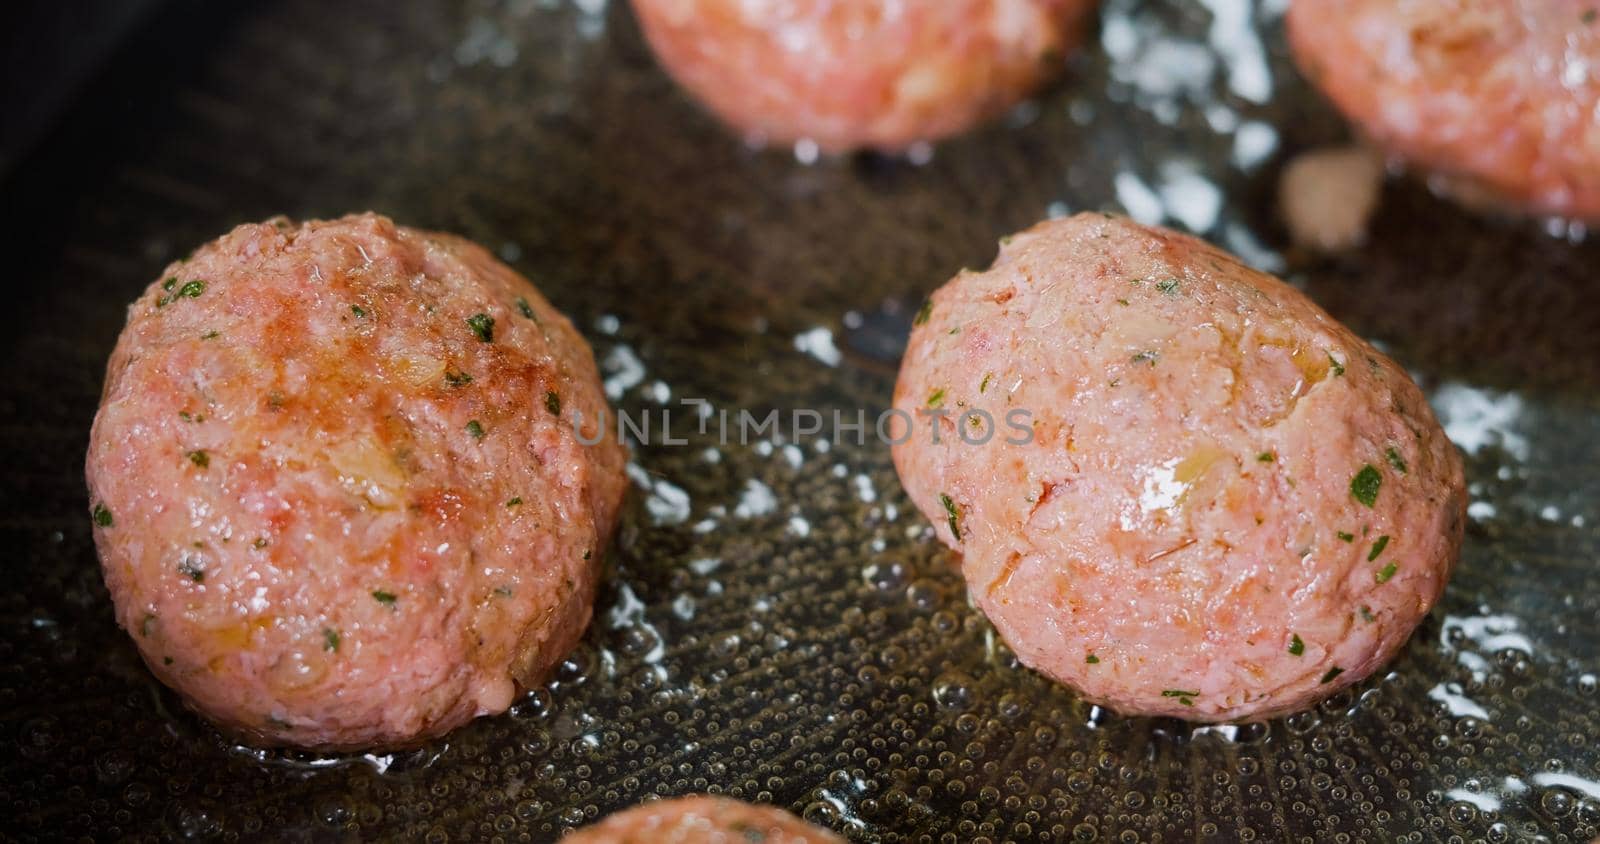 Tasty Meatballs Frying on Hot Pan Art Food, Gourmet Meal